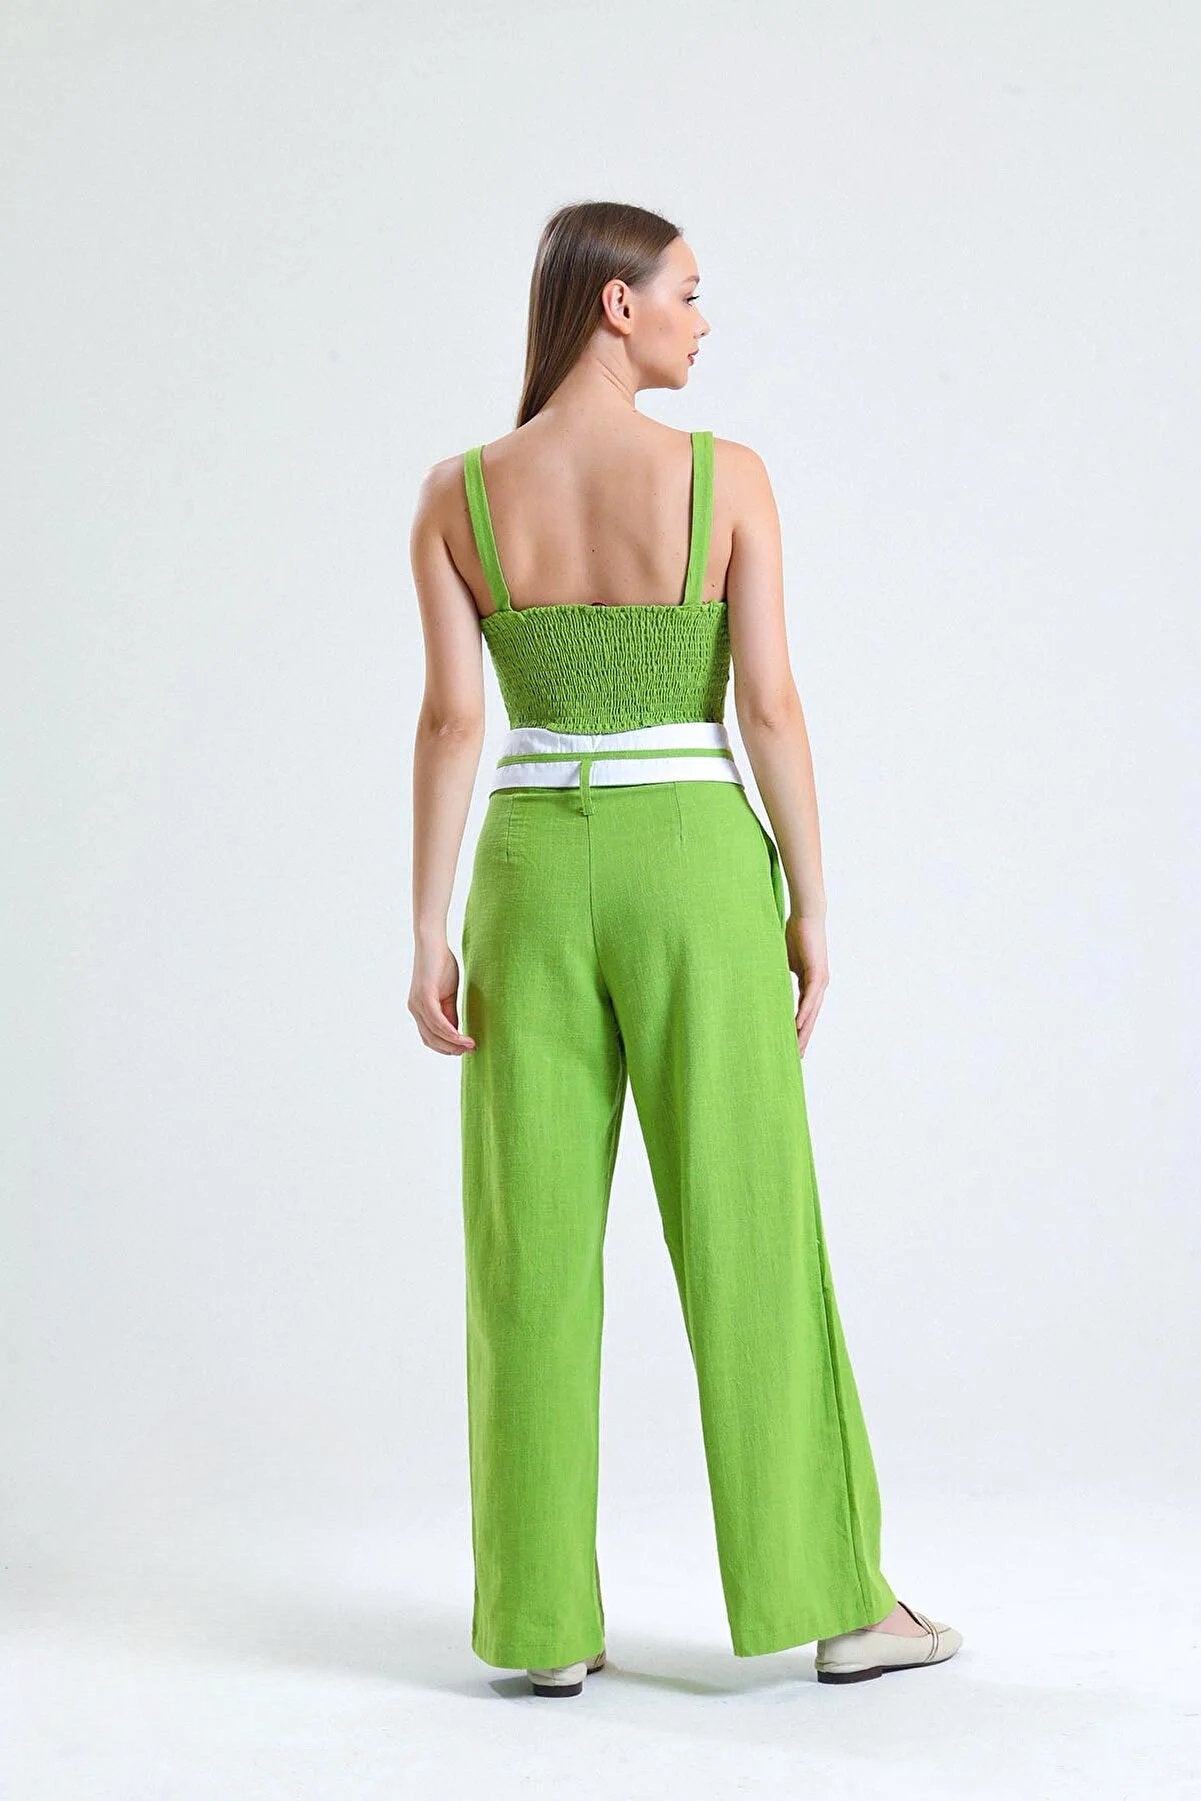 100% Organic Fabric Crop Top - Green - Top - LussoCA